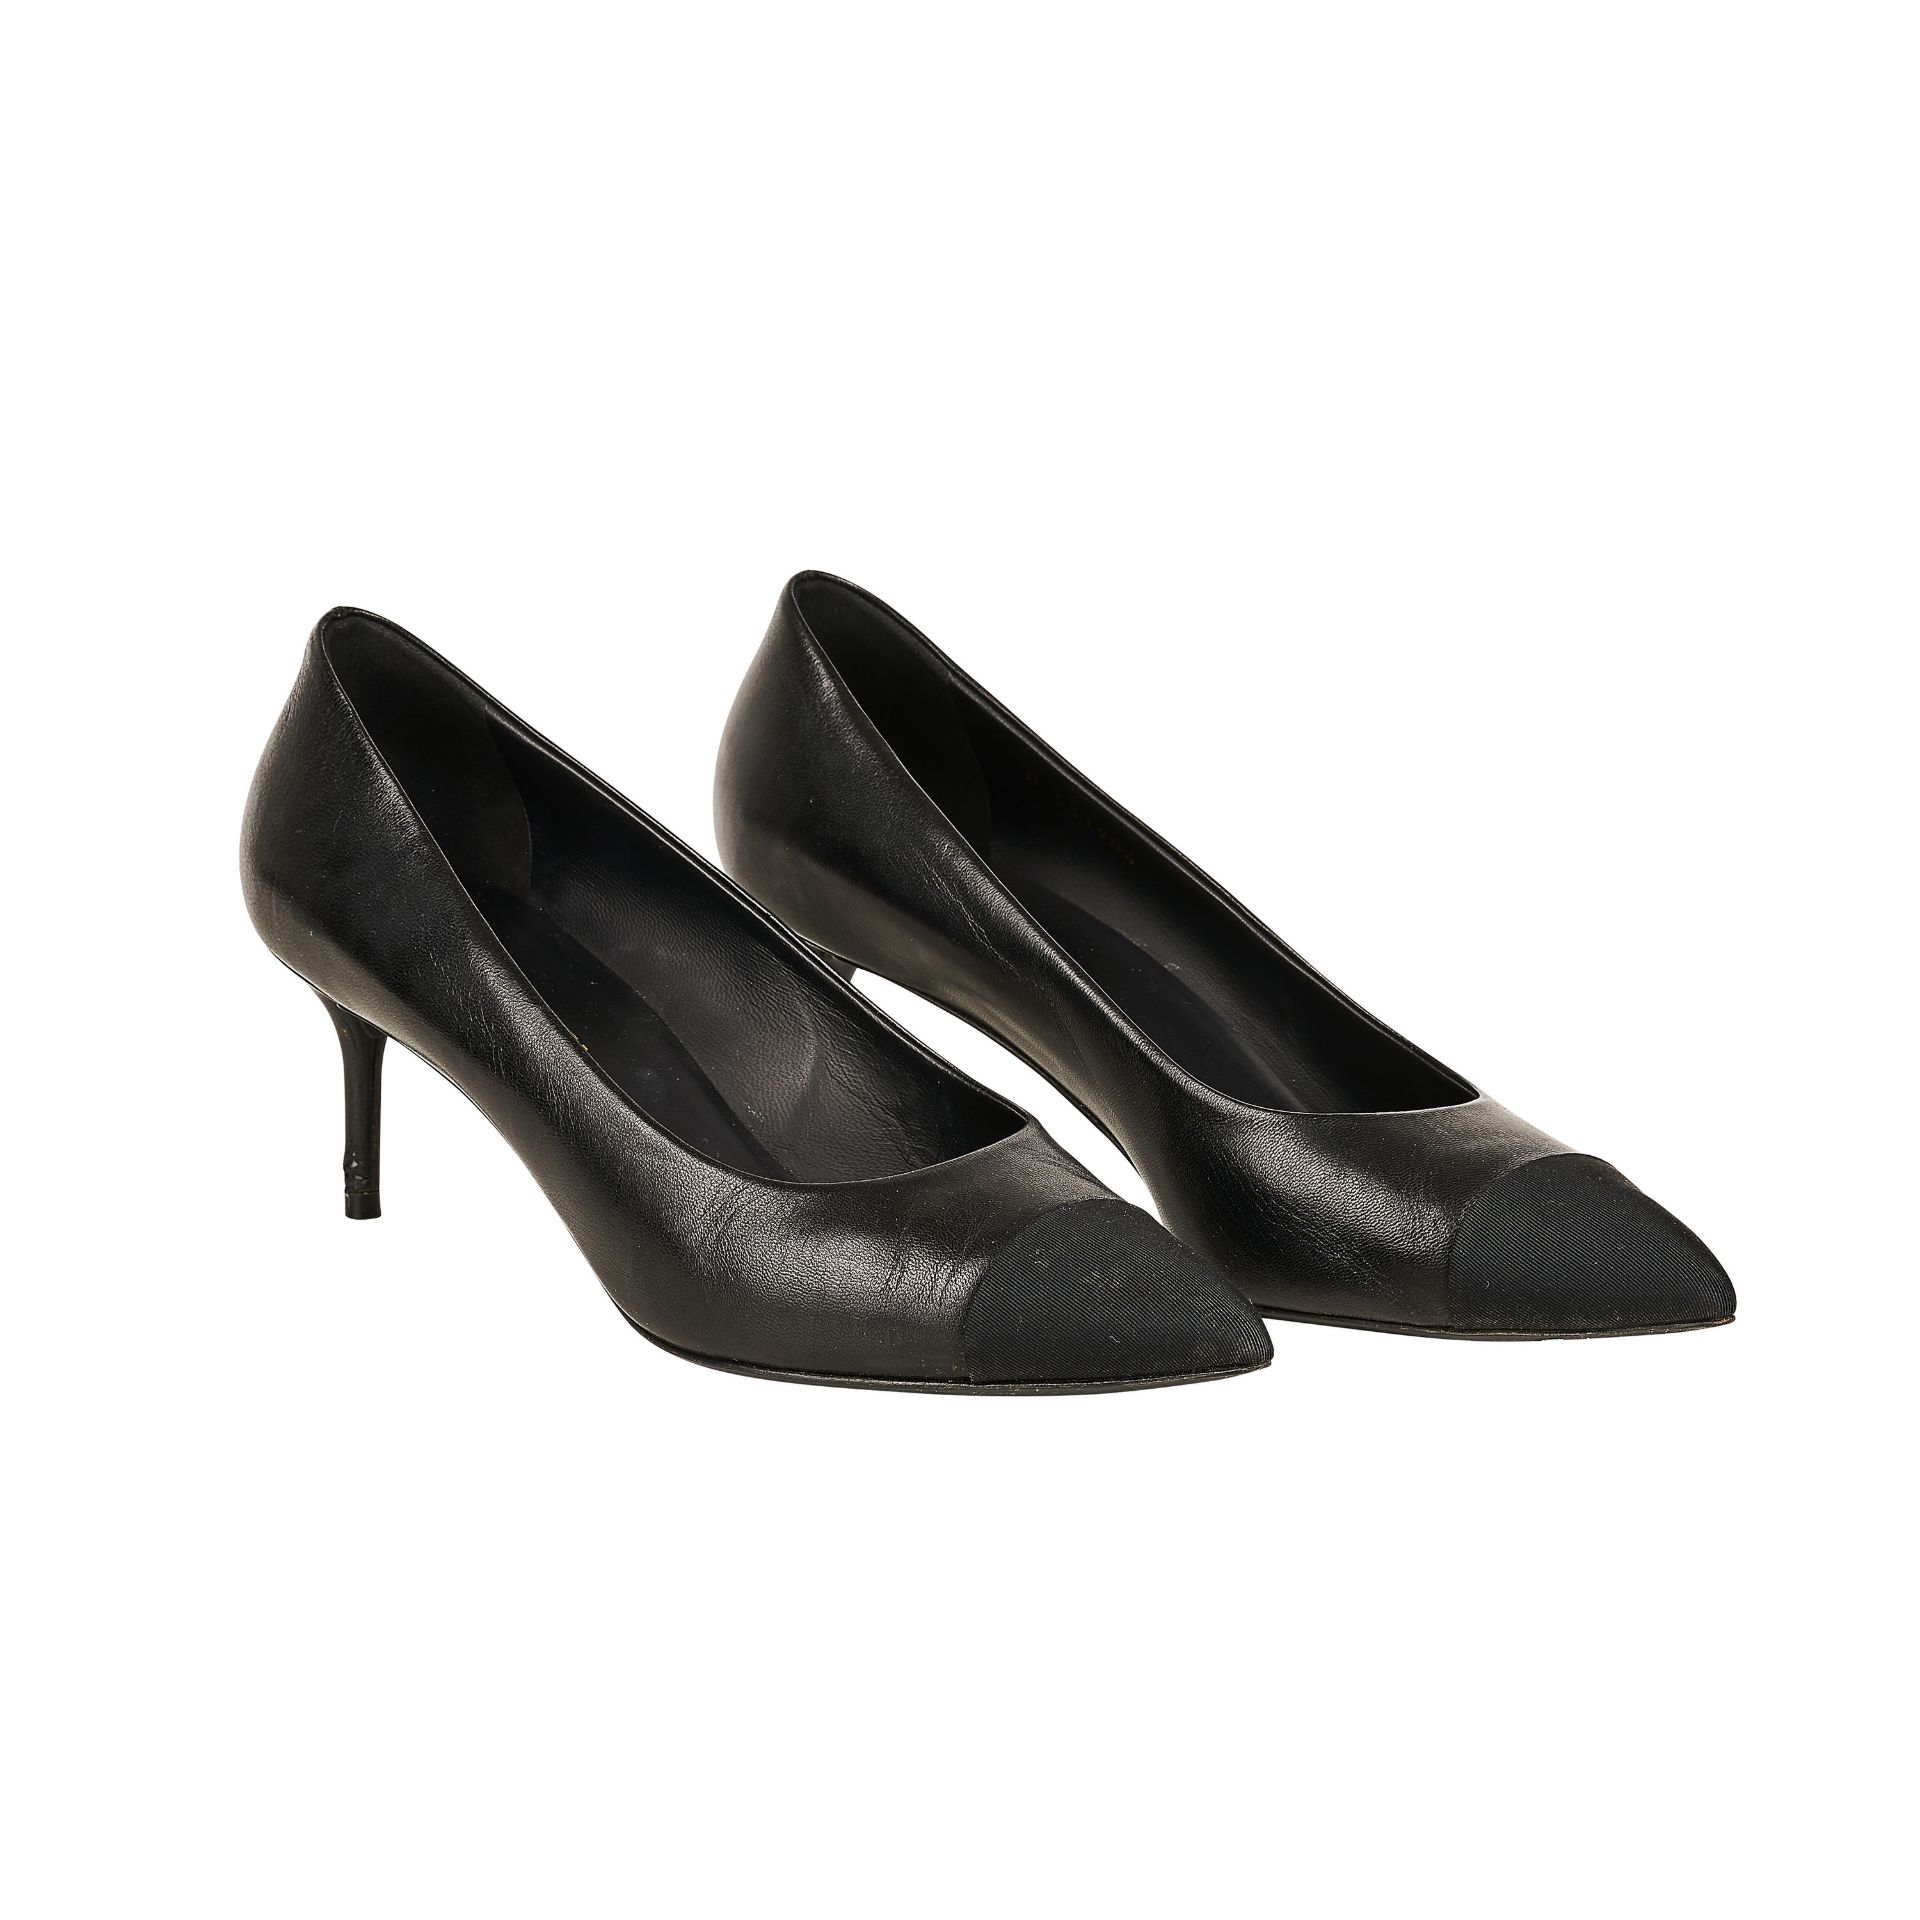 CHANEL BLACK KITTEN HEELS. Condition grade B. Size 40.5. Heel height 65cm. Black leather pointy c...